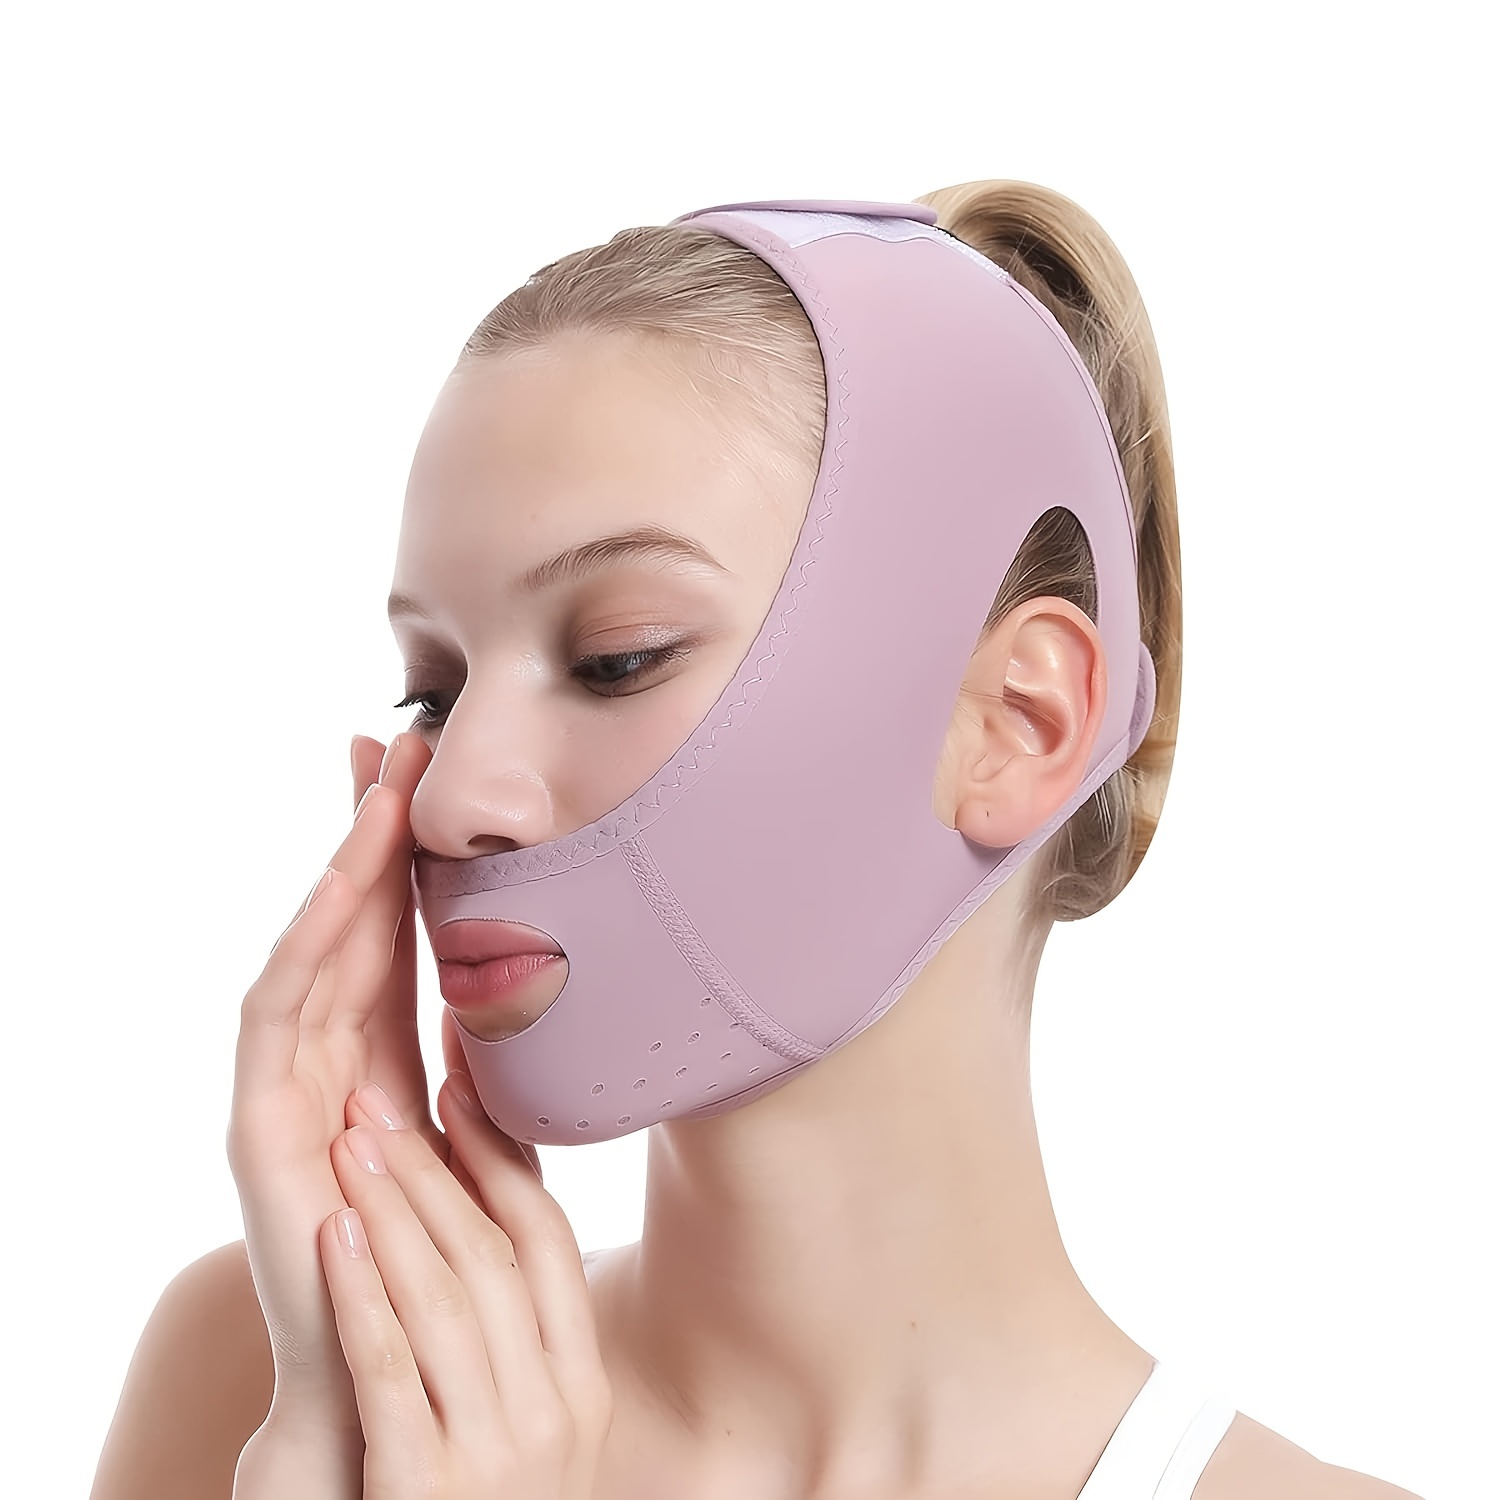 Facial Lift Tape,1Pc Sleep Beauty Face Belt Face Lift Face Belts Face Lift  Bandage